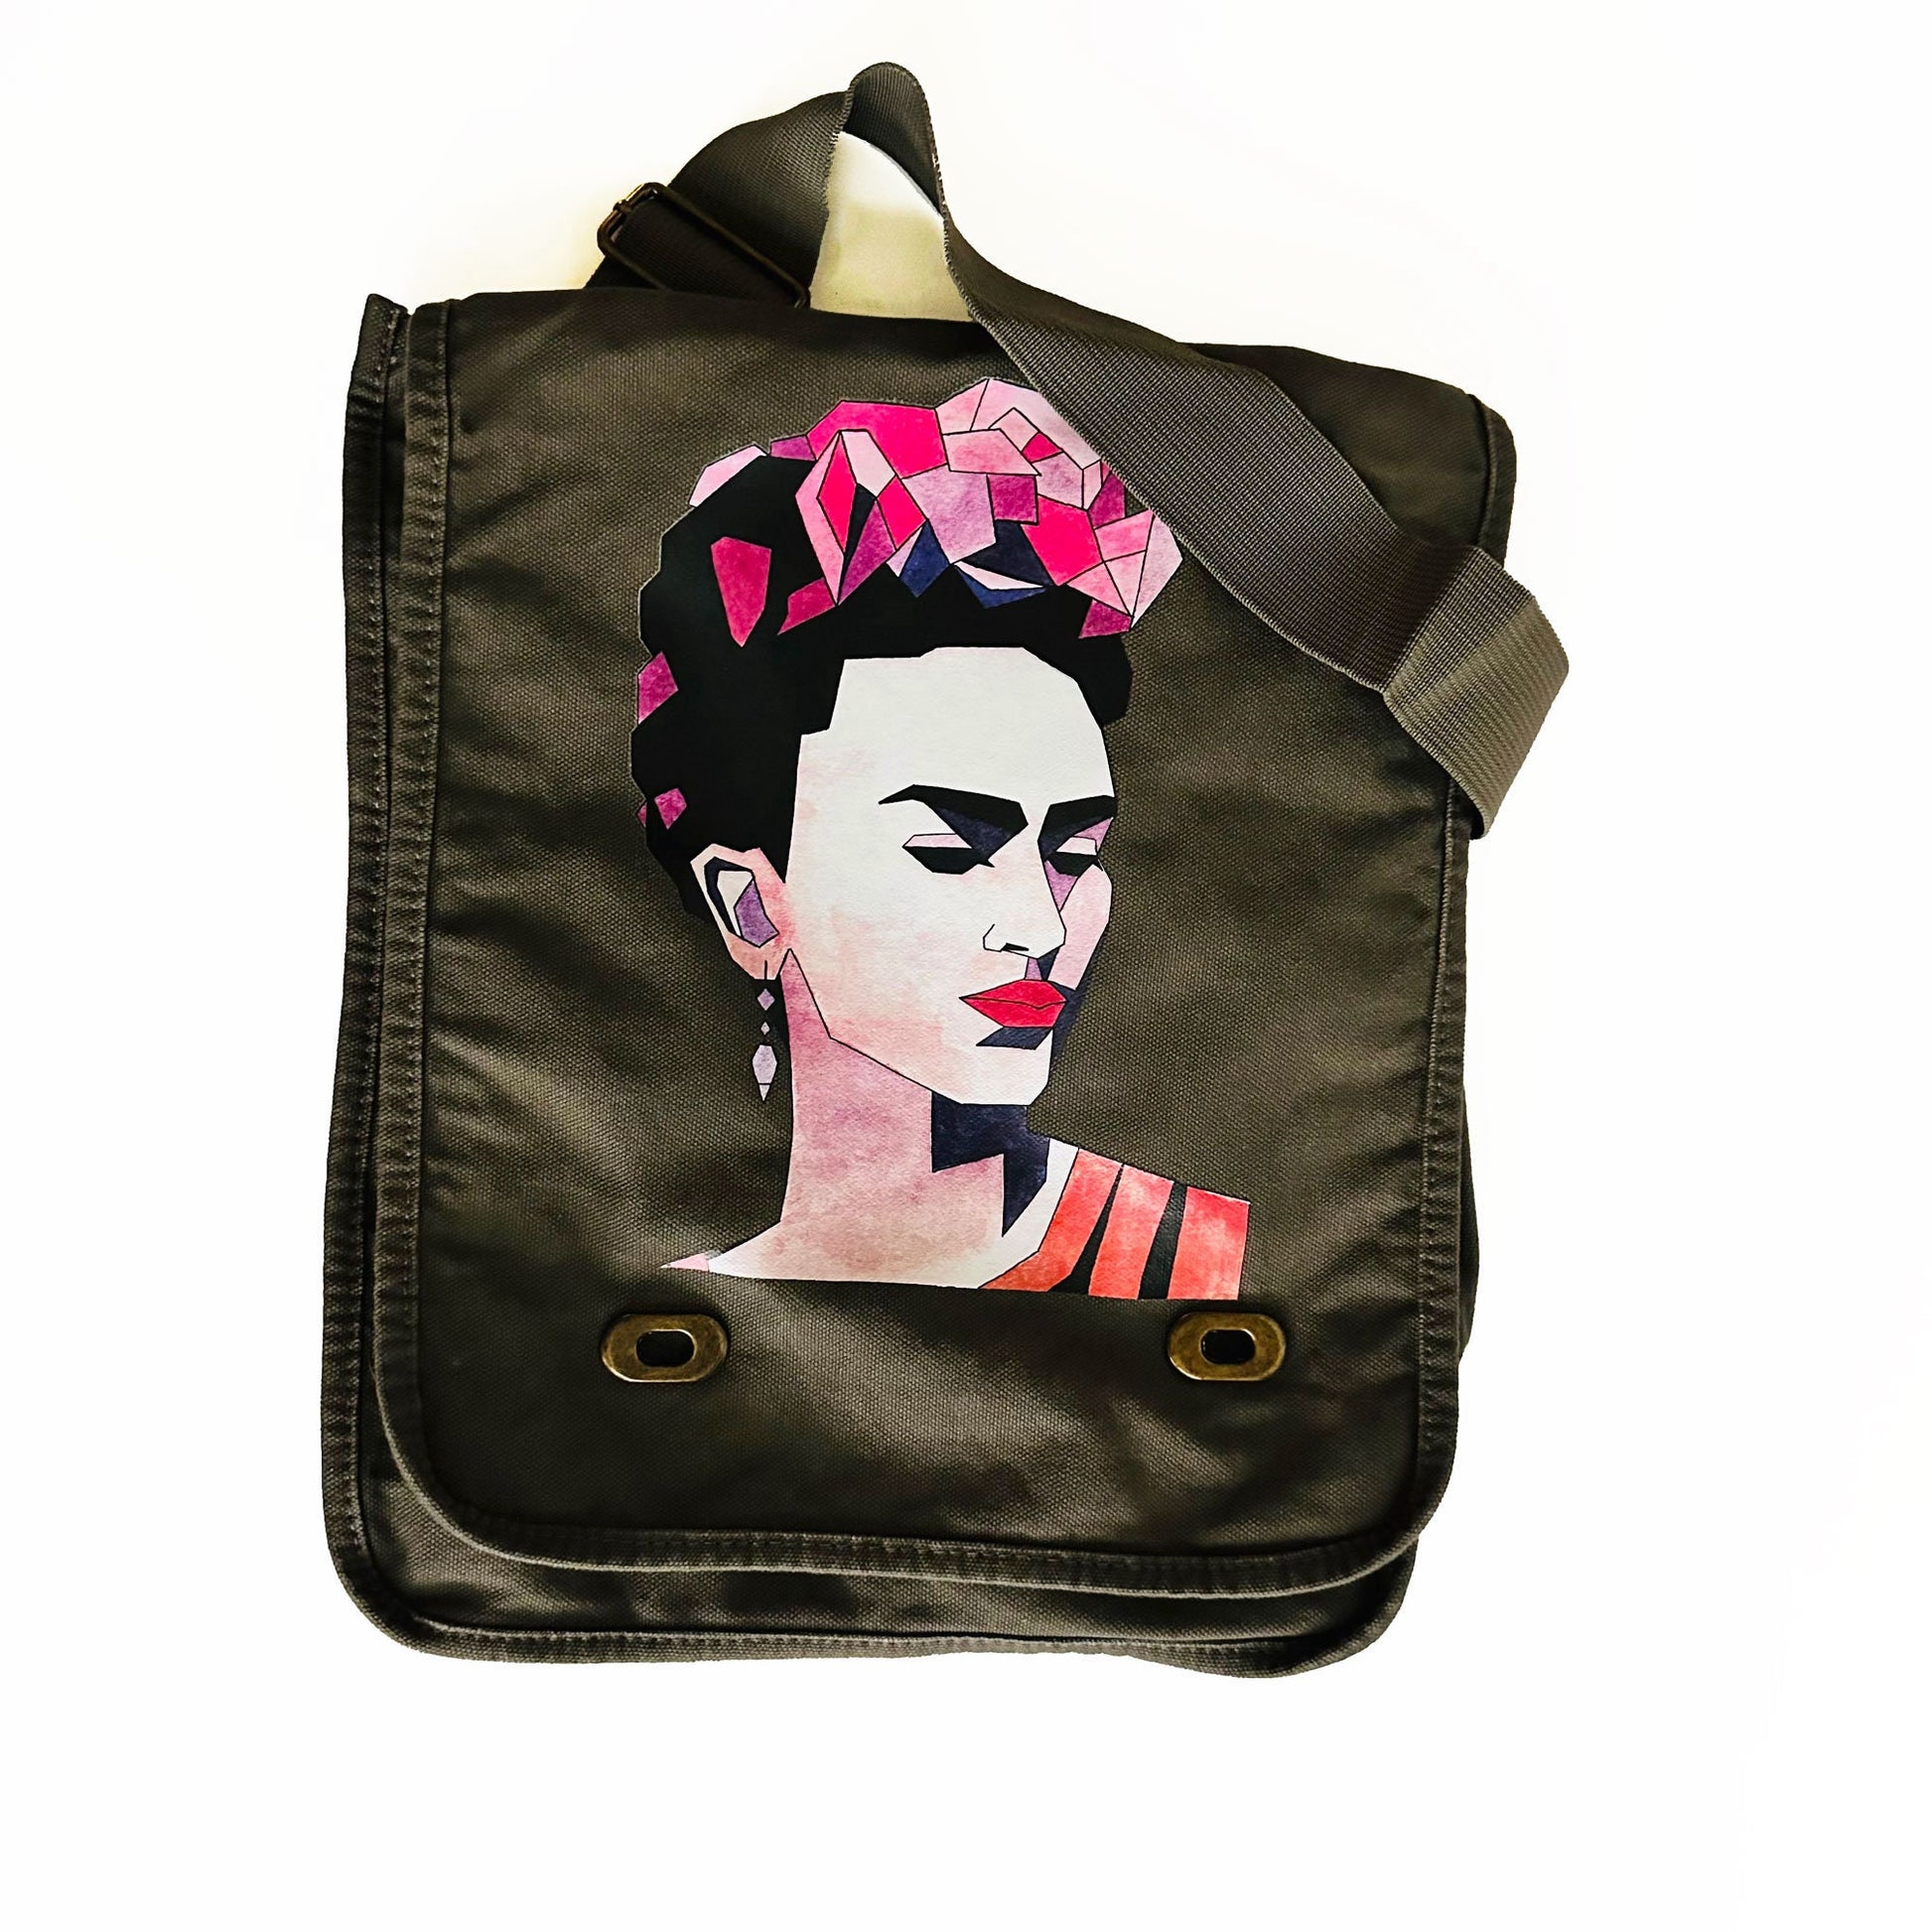 Evocative Frida Inspired Bag Shoulder Crossbody Canvas Fabric Washed Military Messenger Bag Women Girls Fridalovers Fashion Gift Mexican Art